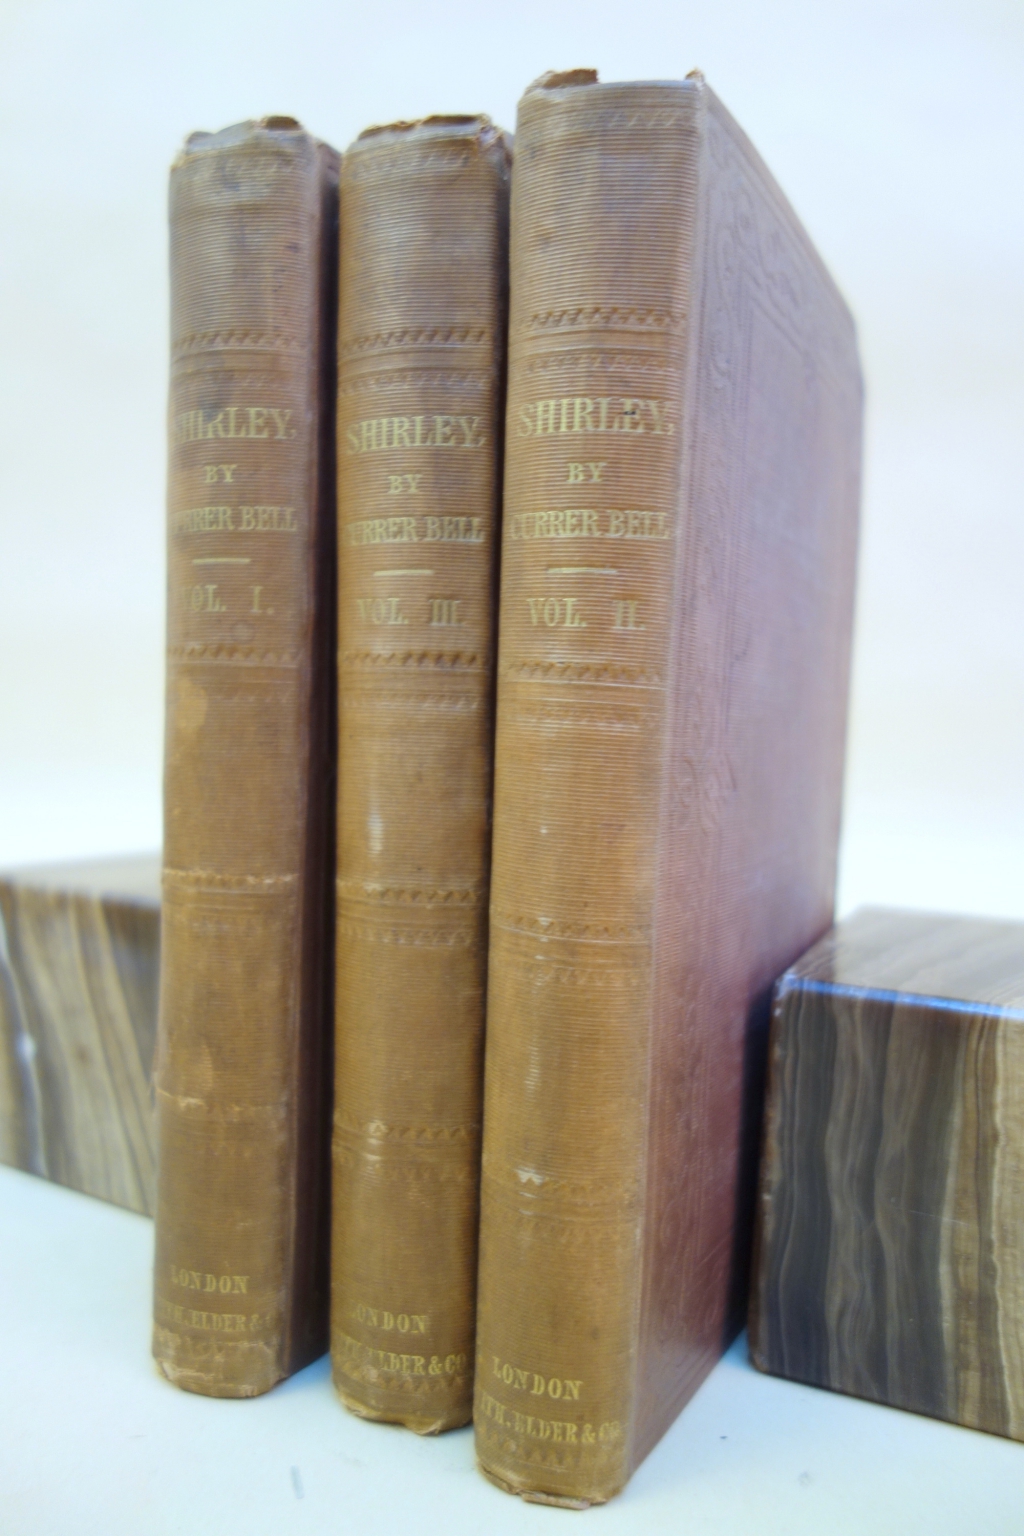 Three-decker first edition of Shirley